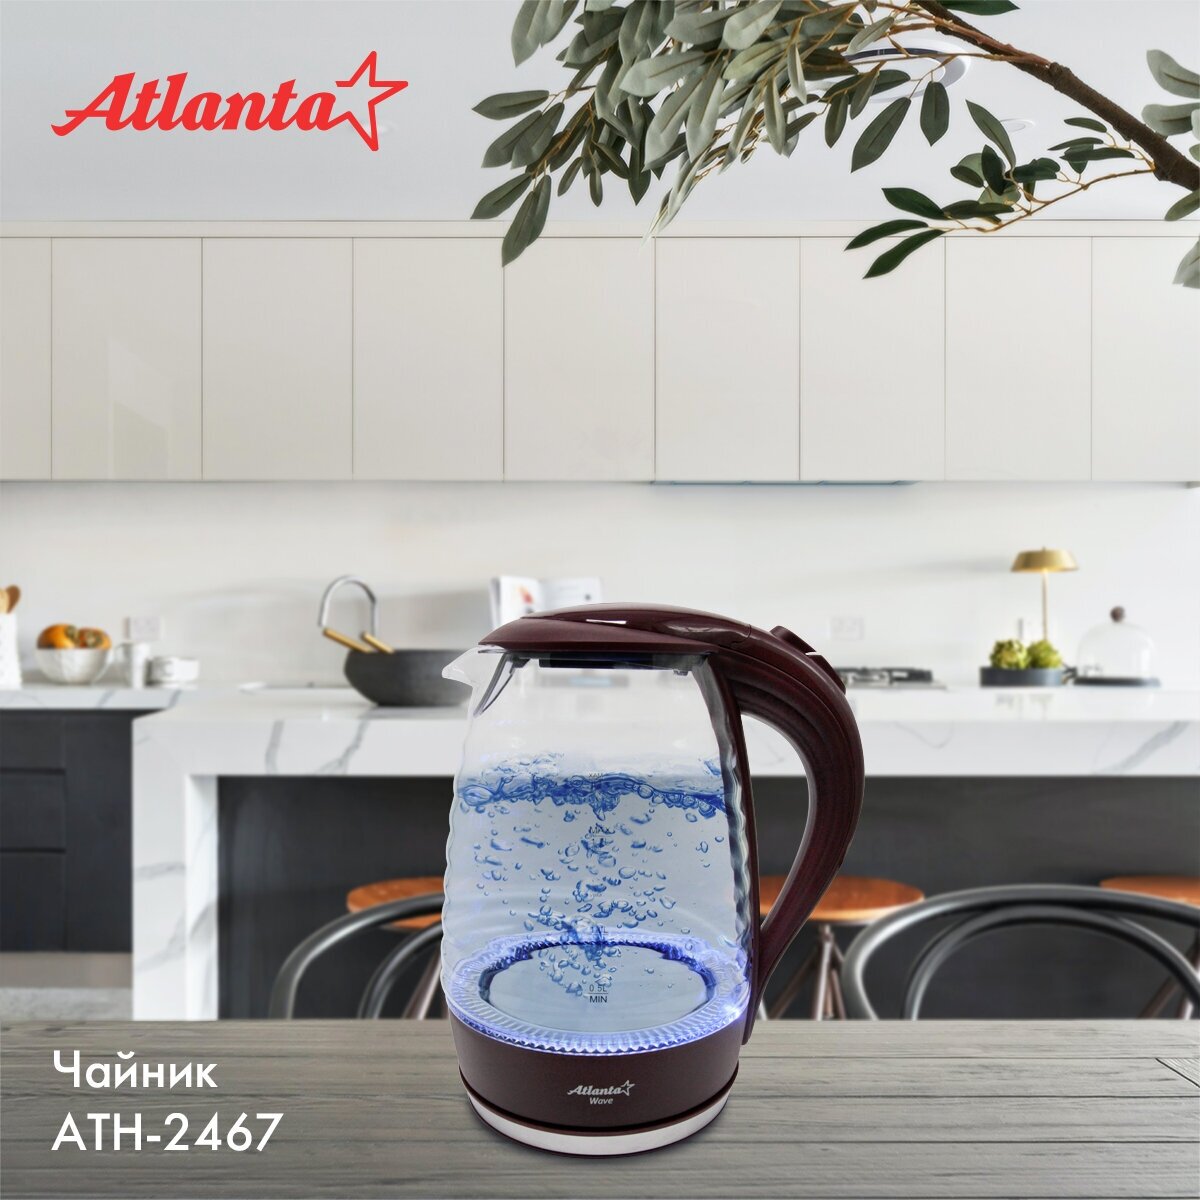 Электрический чайник Atlanta ATH-2467